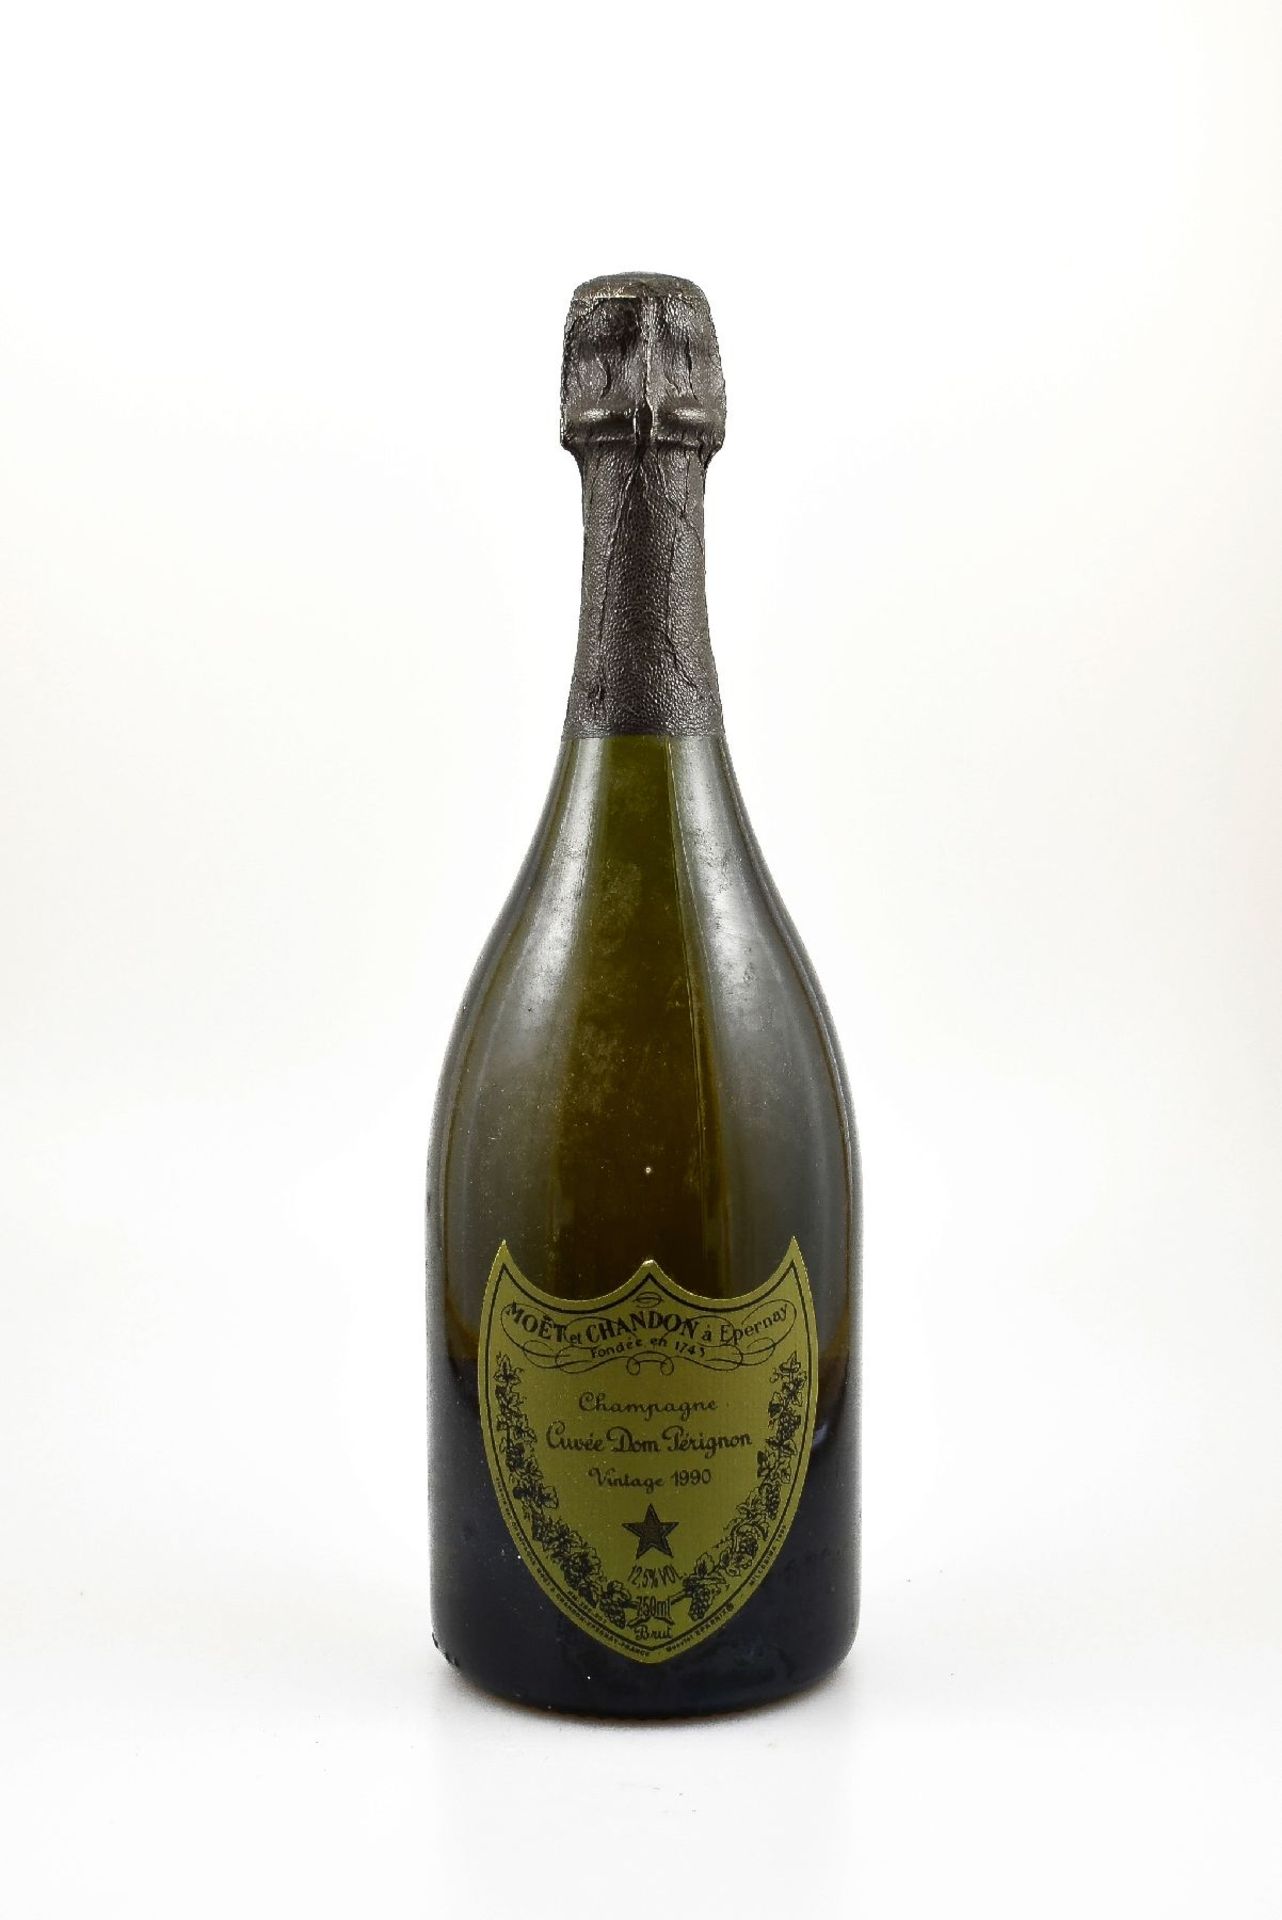 1 bottle 1990 Dom Perignon, Champagne, Brut, approx 75 cl, 12,5 % Vol., distance between bottle